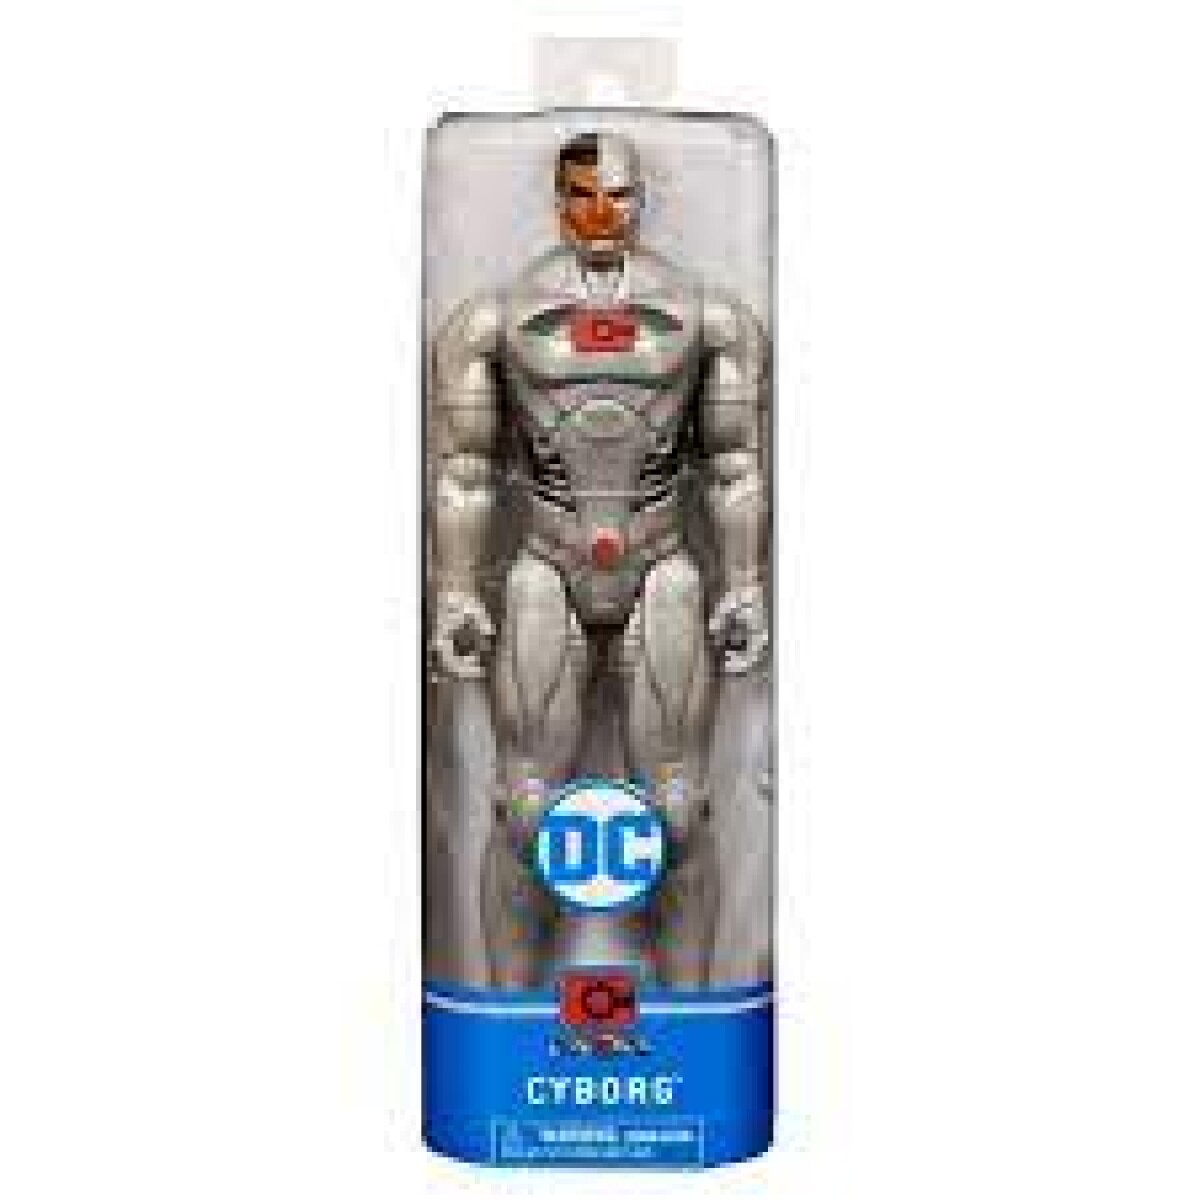 Cyborg figura articulada 30cm 